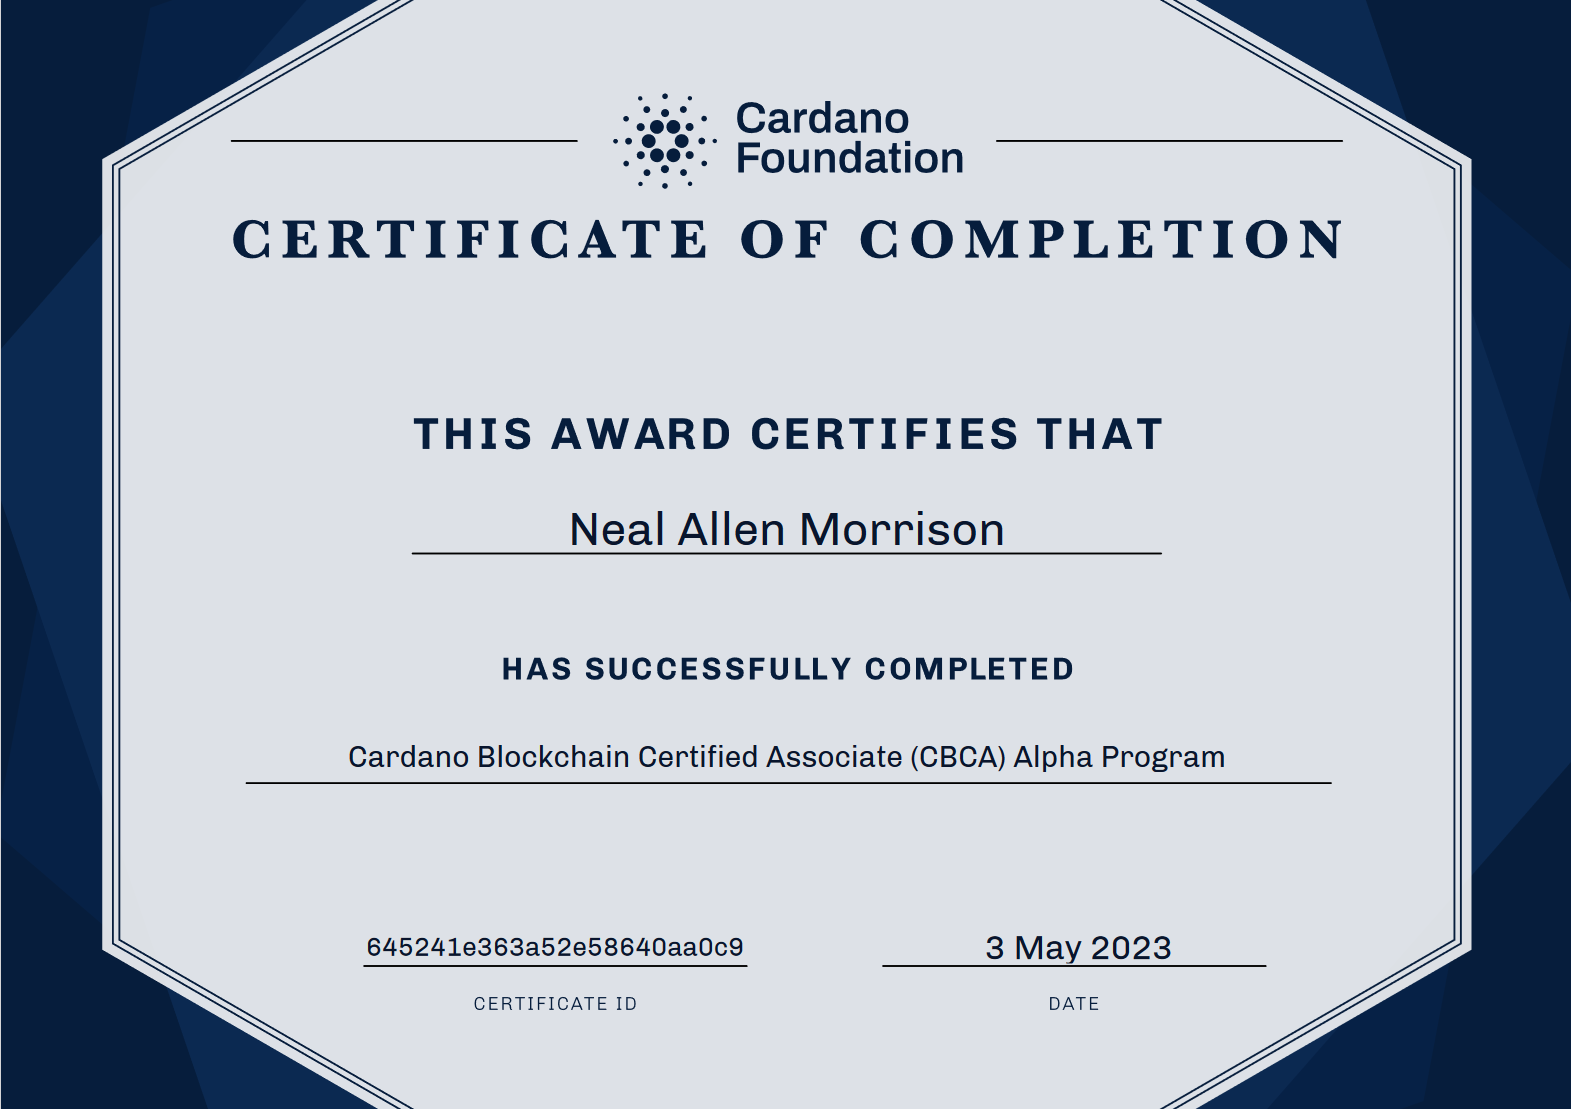 Cardano Blockchain Certified Associate